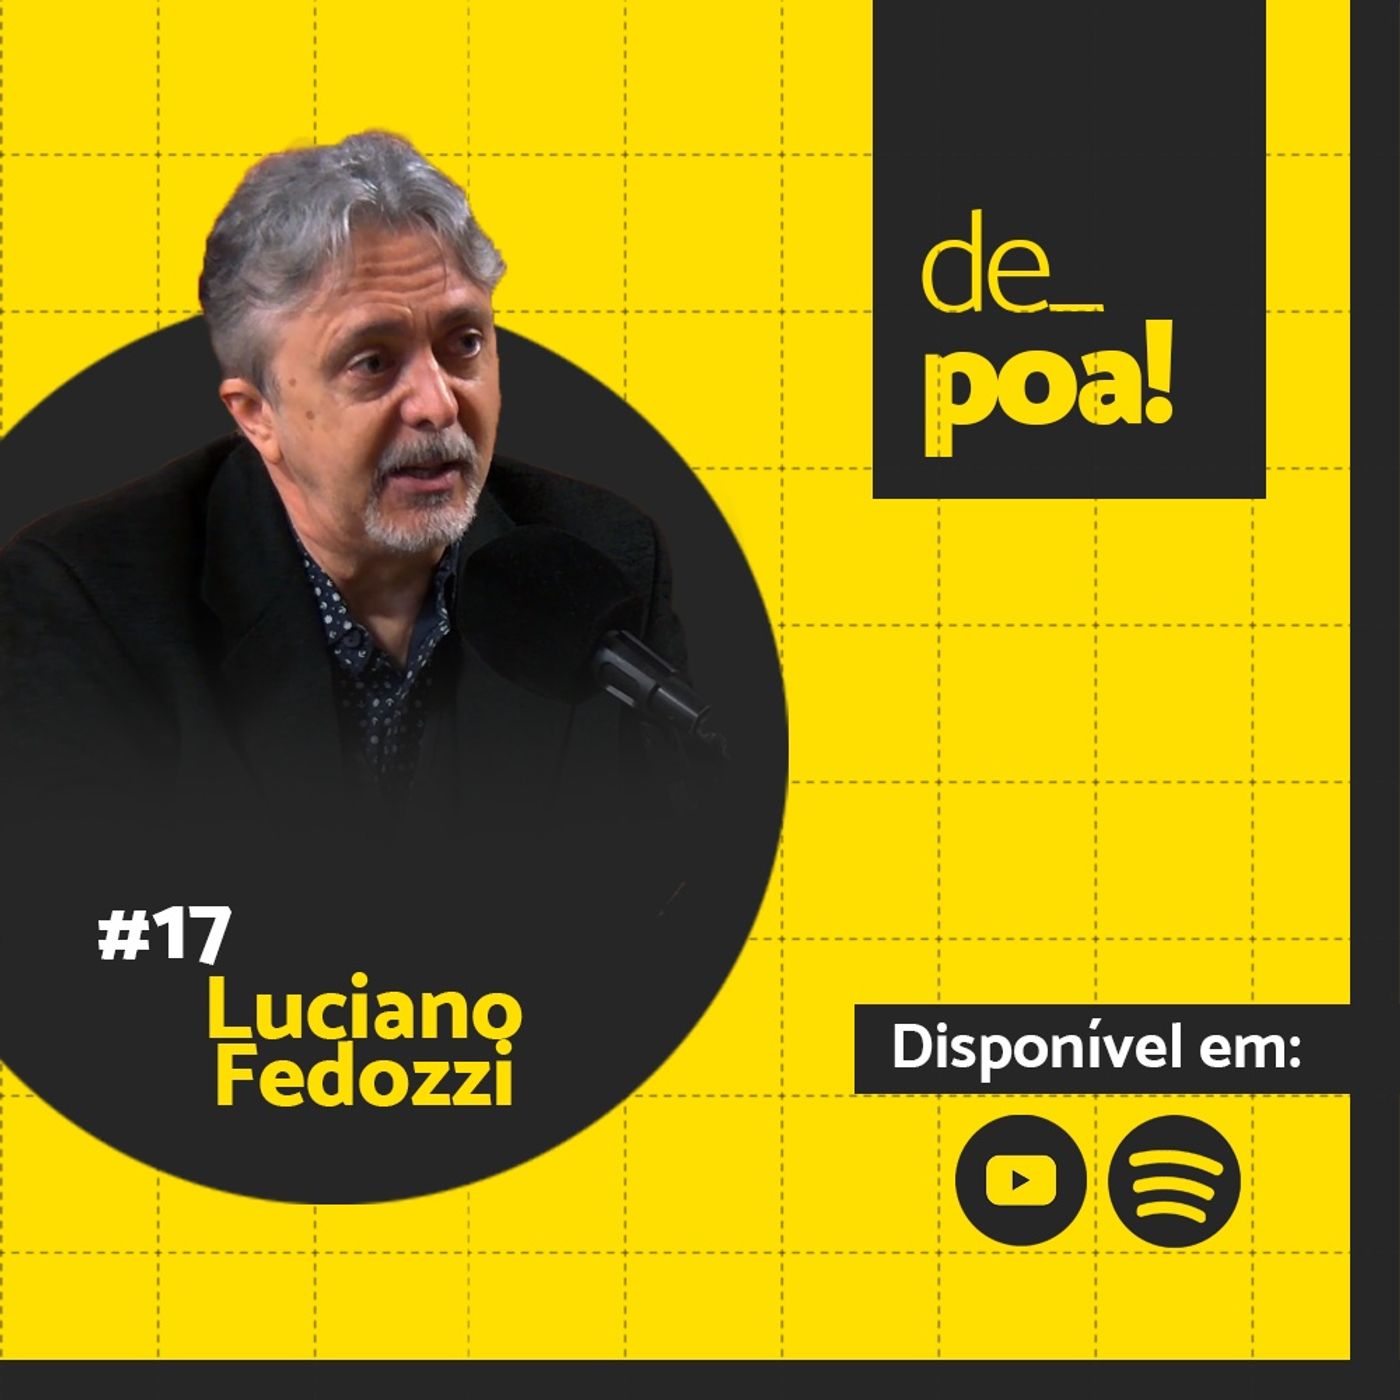 De Poa com Luciano Fedozzi